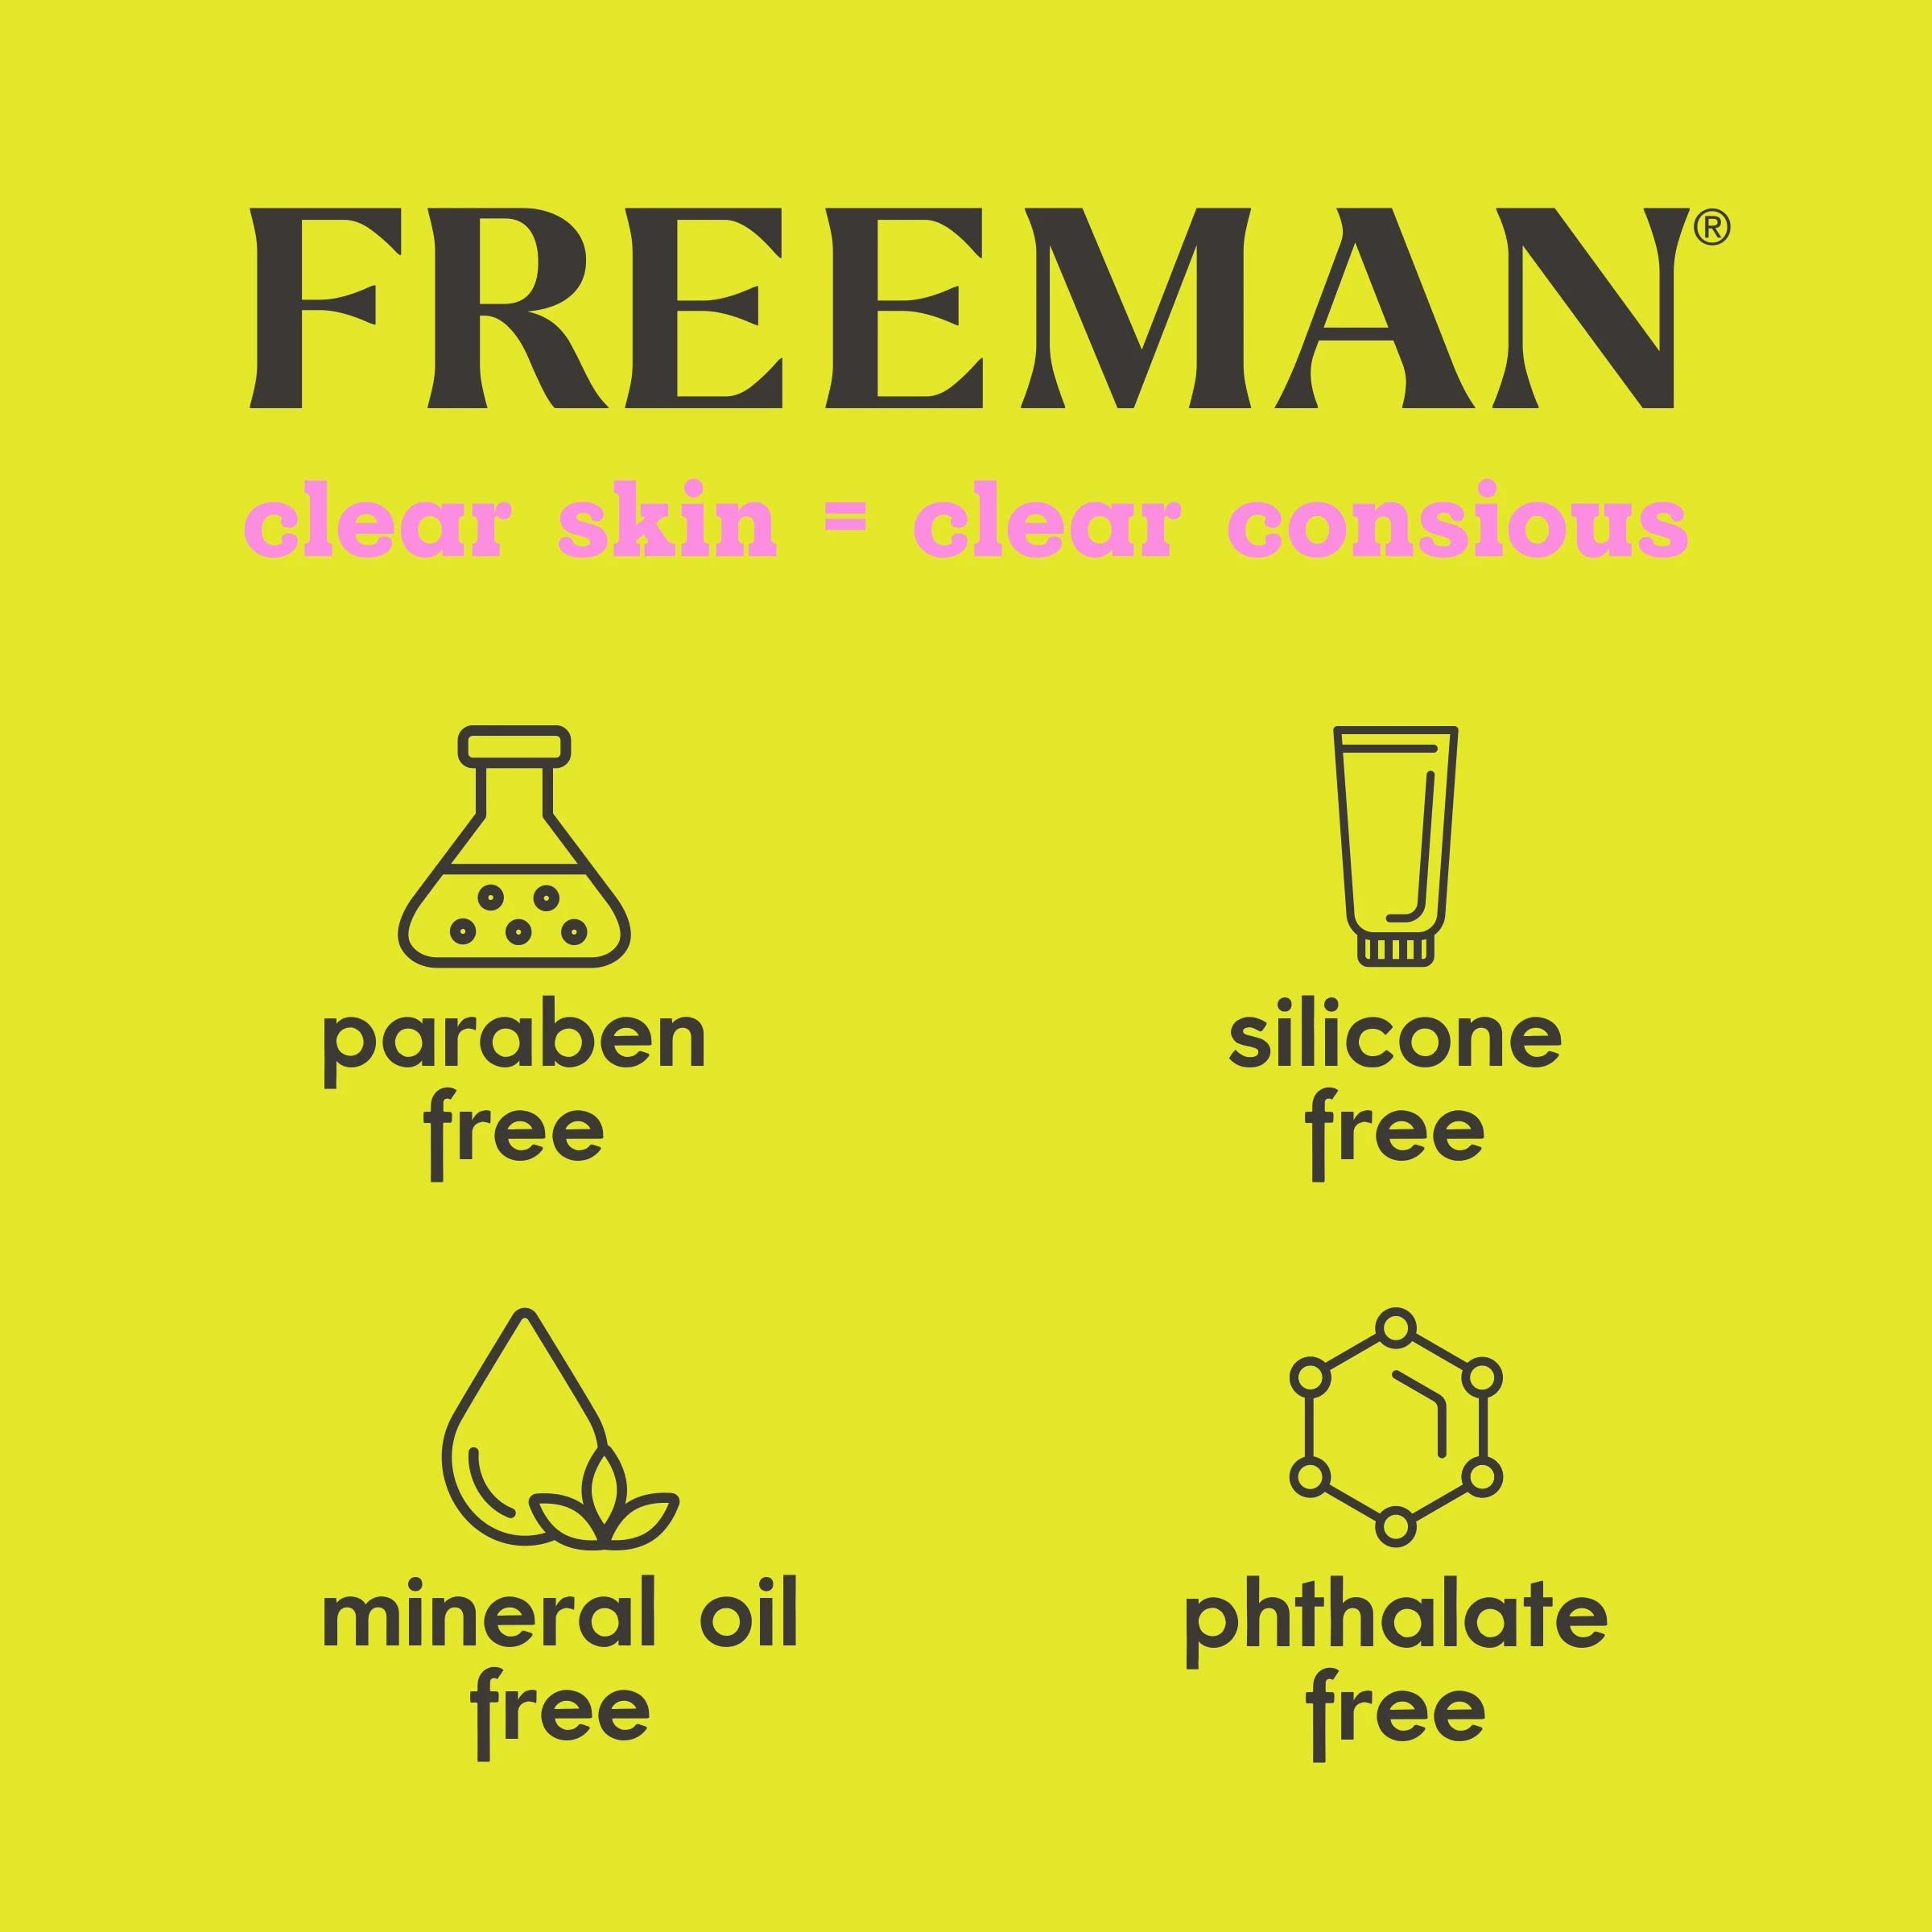 Freeman Naturals Facial Mask Variety Bundle, Peel-Off, Gel & Cream Face Masks, Hydrating, Brightening, & Nourishing Skincare, Natural Ingredients, Travel Size, 0.33 fl. oz./10 ml Sachets, 12 Count